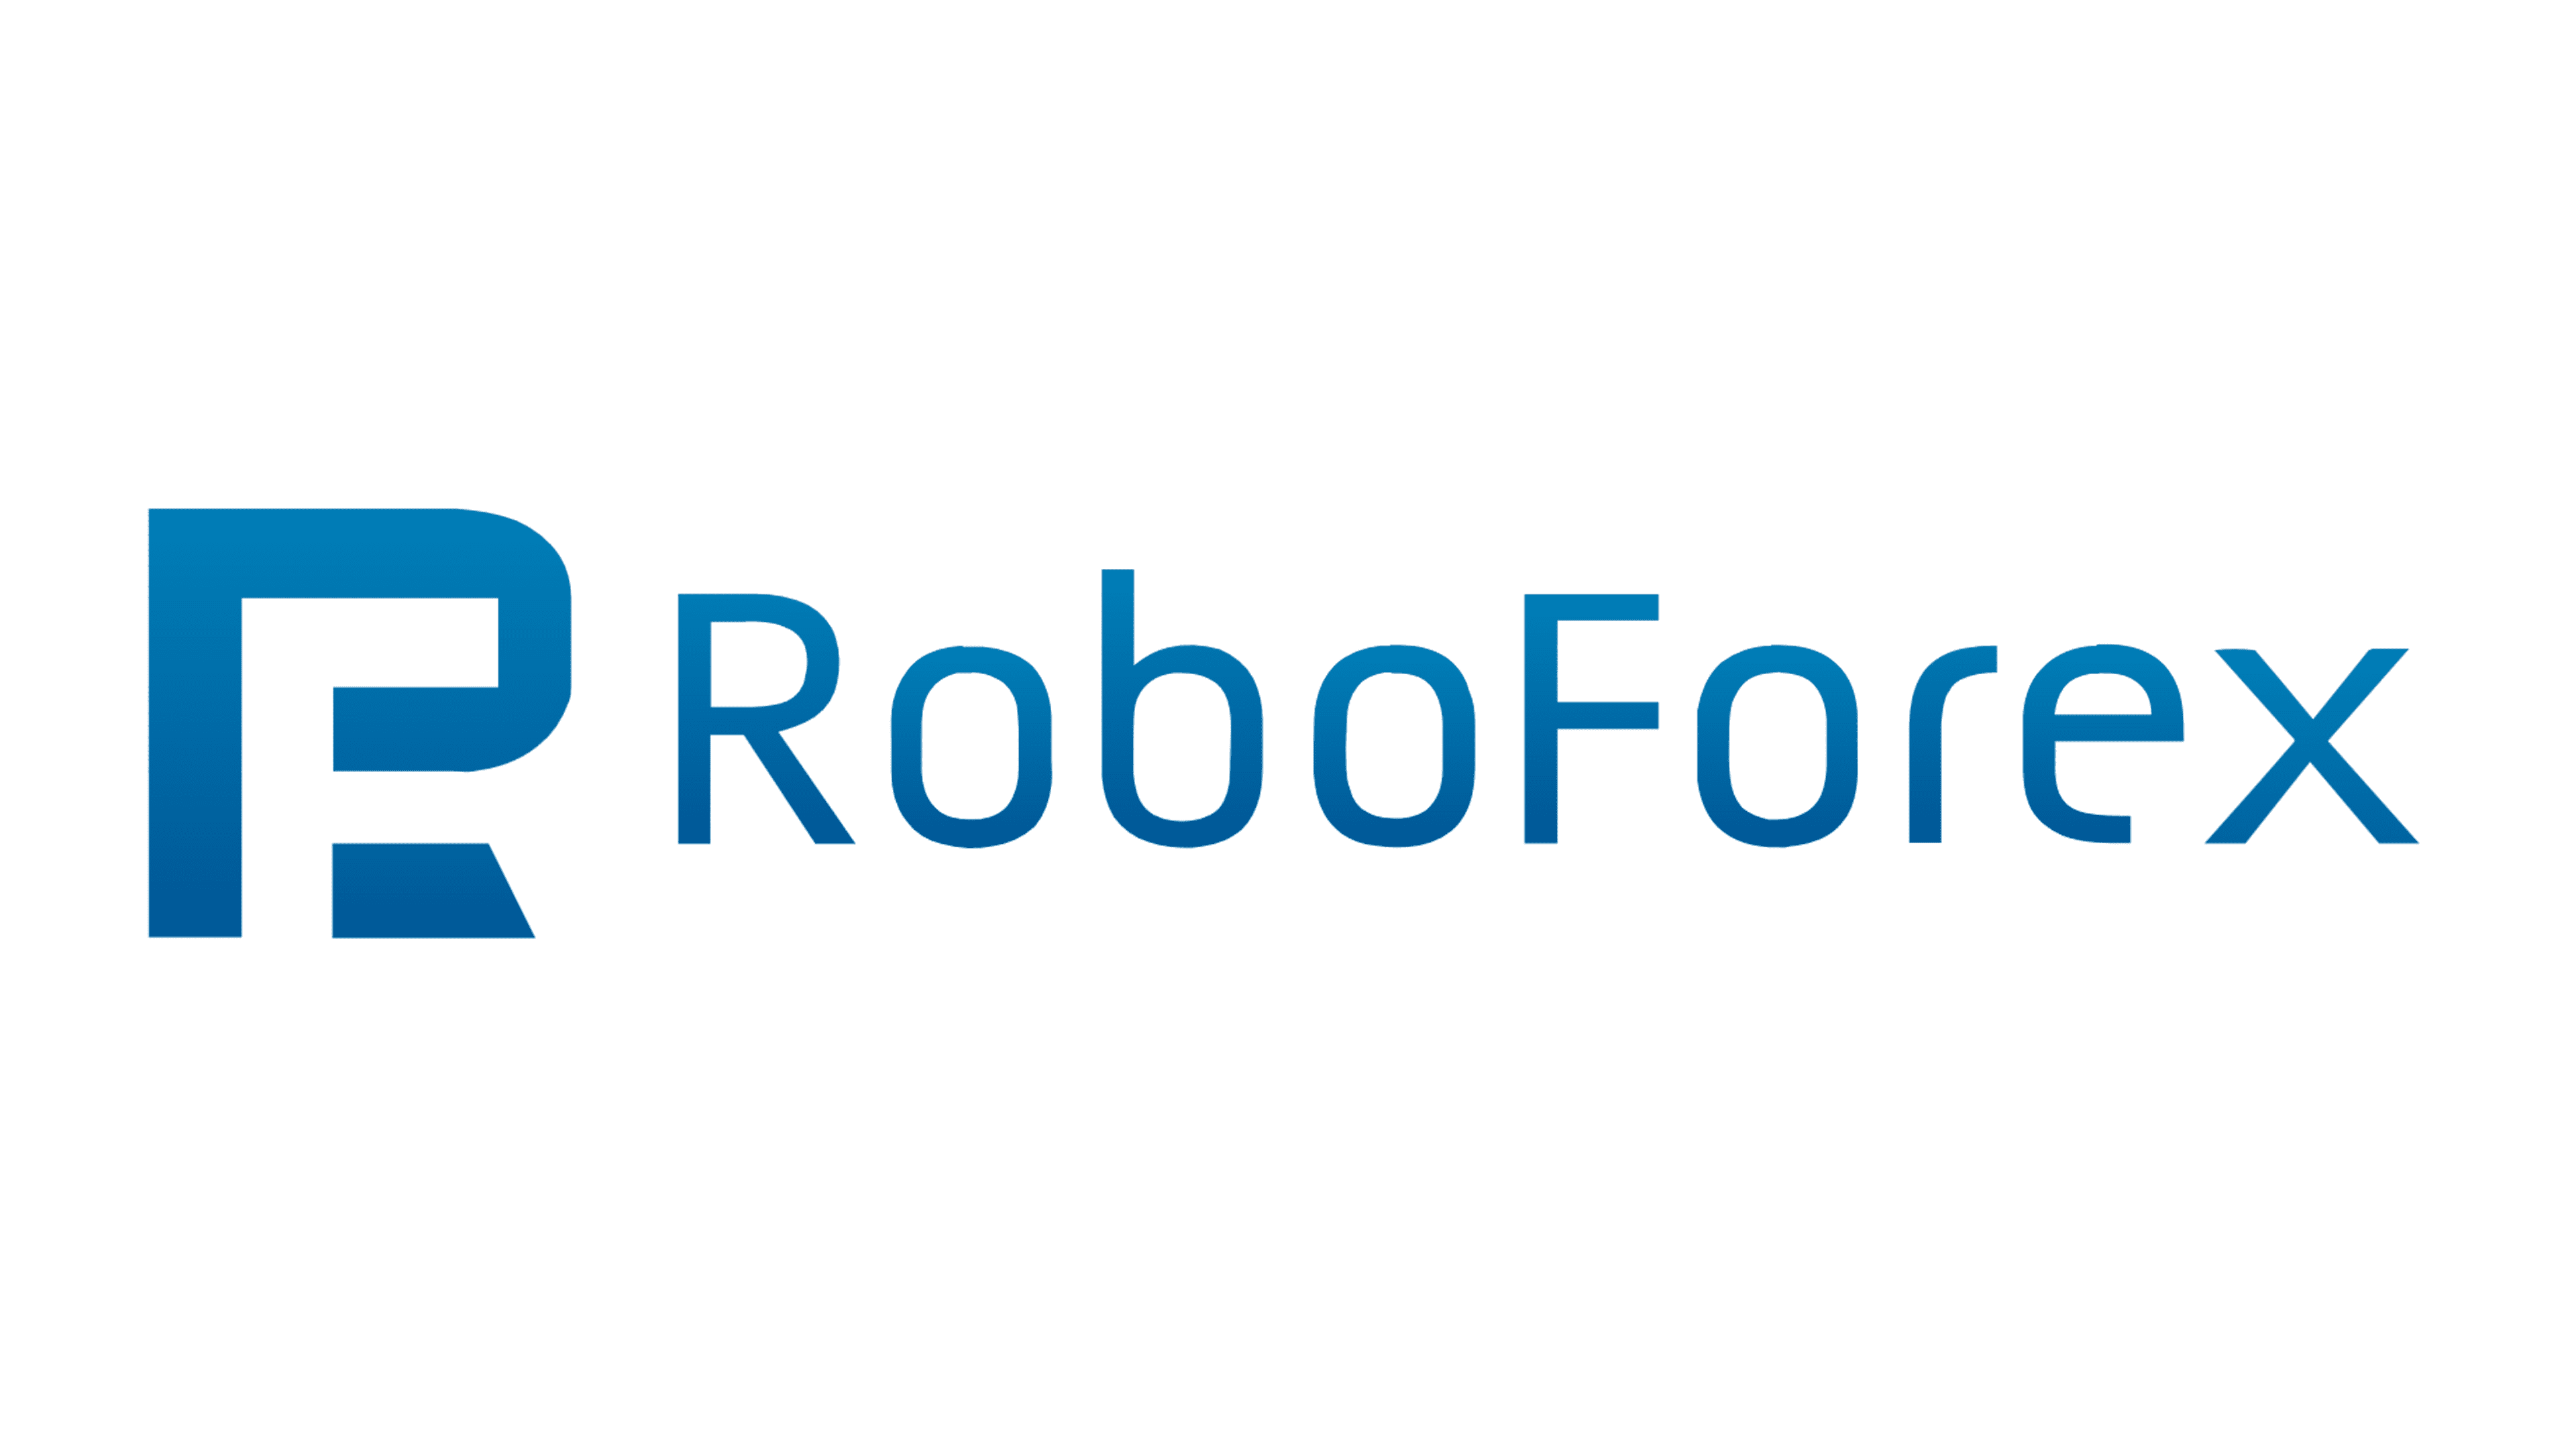 RoboForex’s Bonus Programs and Promotions